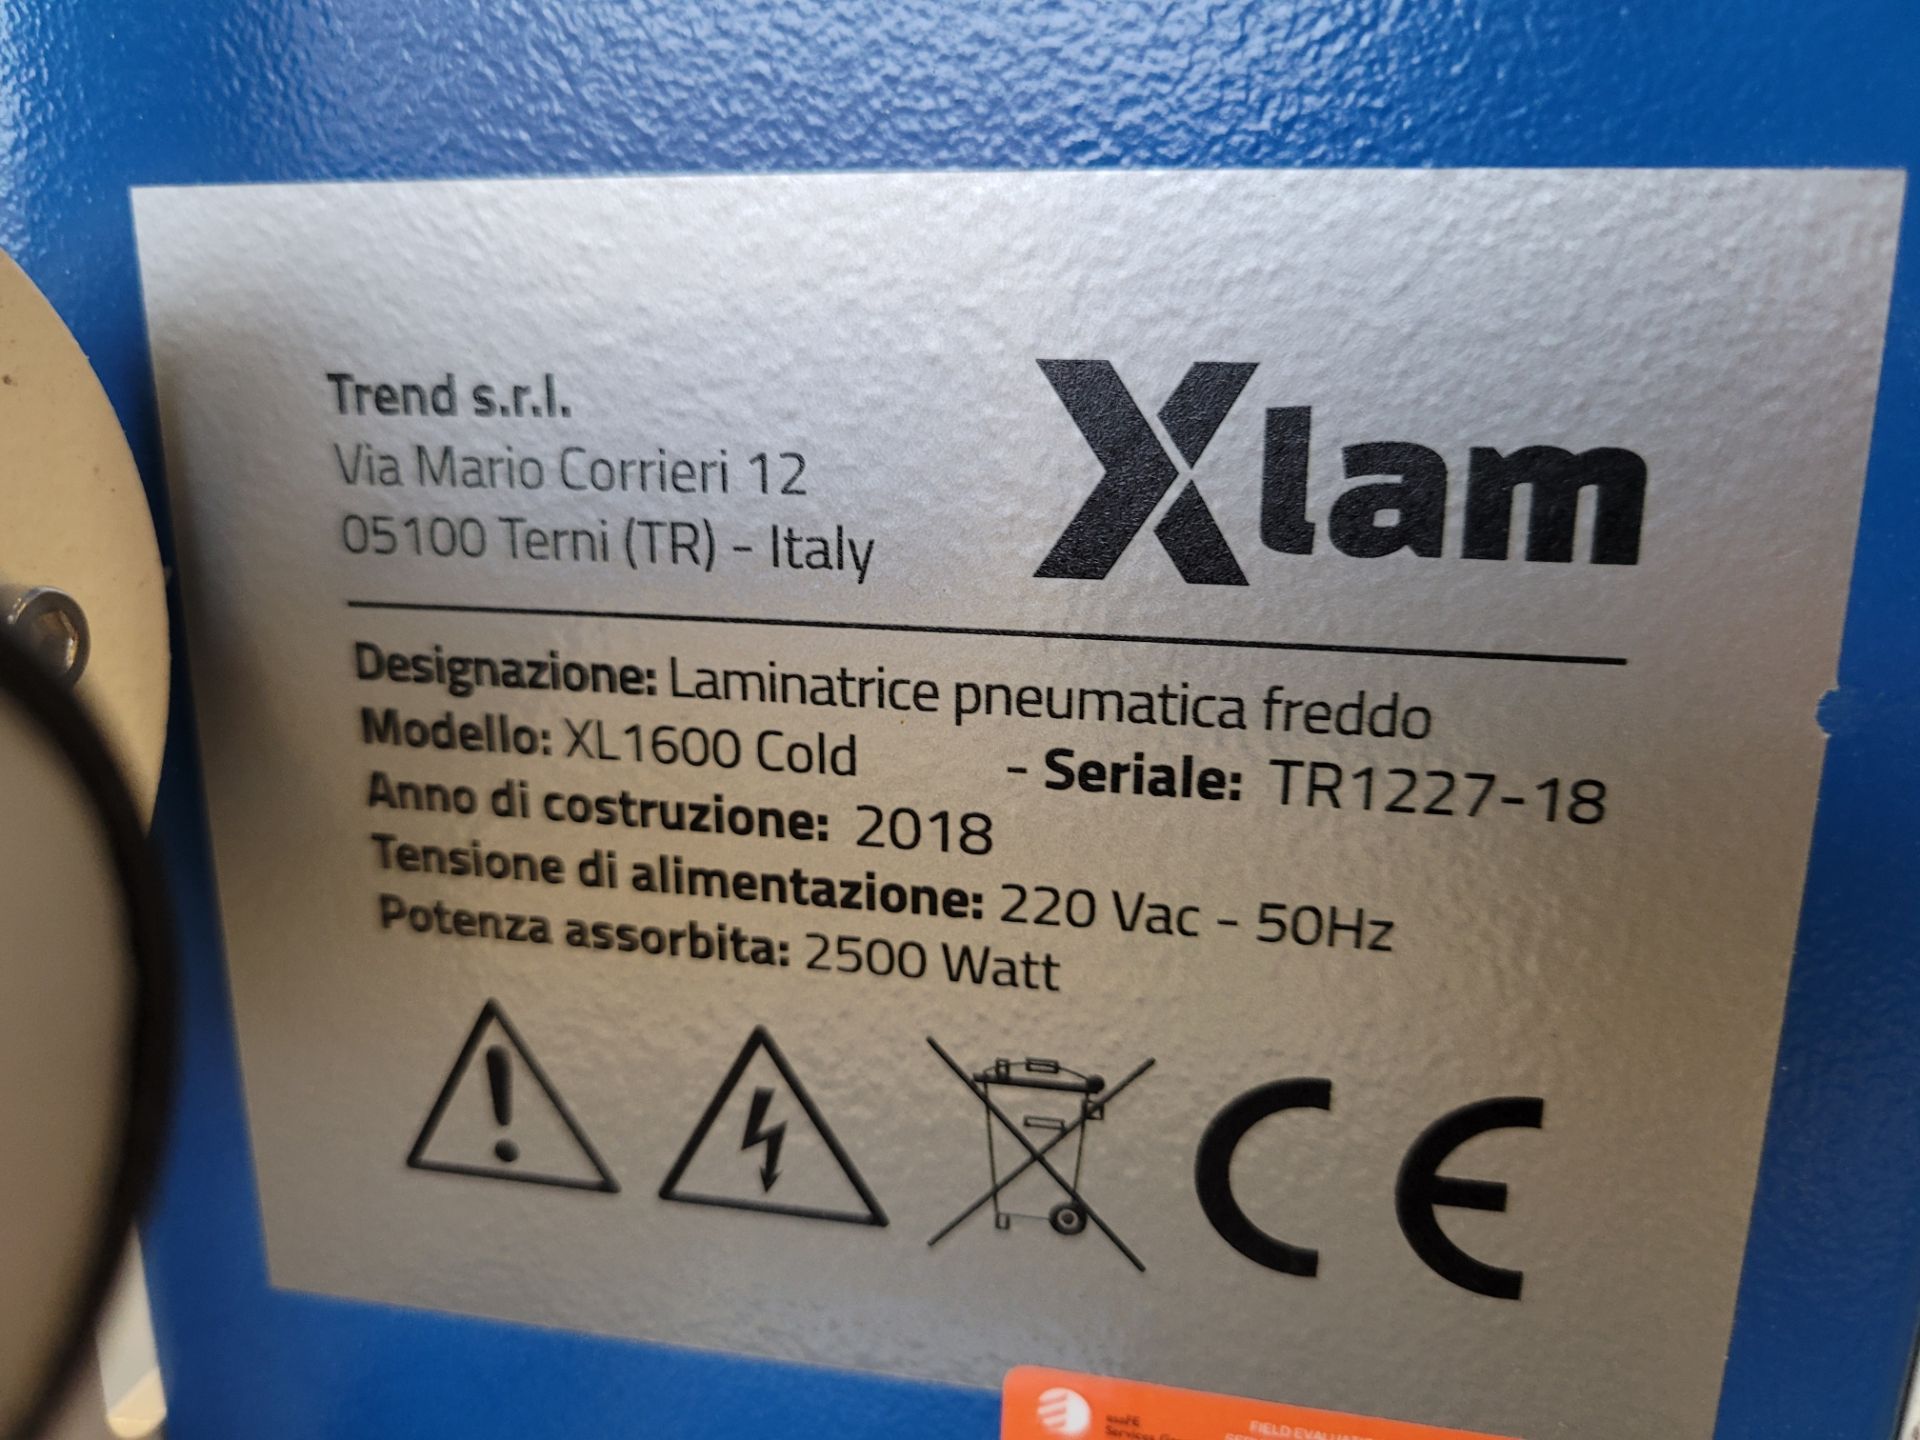 2018 XLAM Laminator mod. XL 1600 Cold, ser. TR-1227-18, dim. 78" x 28" x 51" - Image 8 of 14